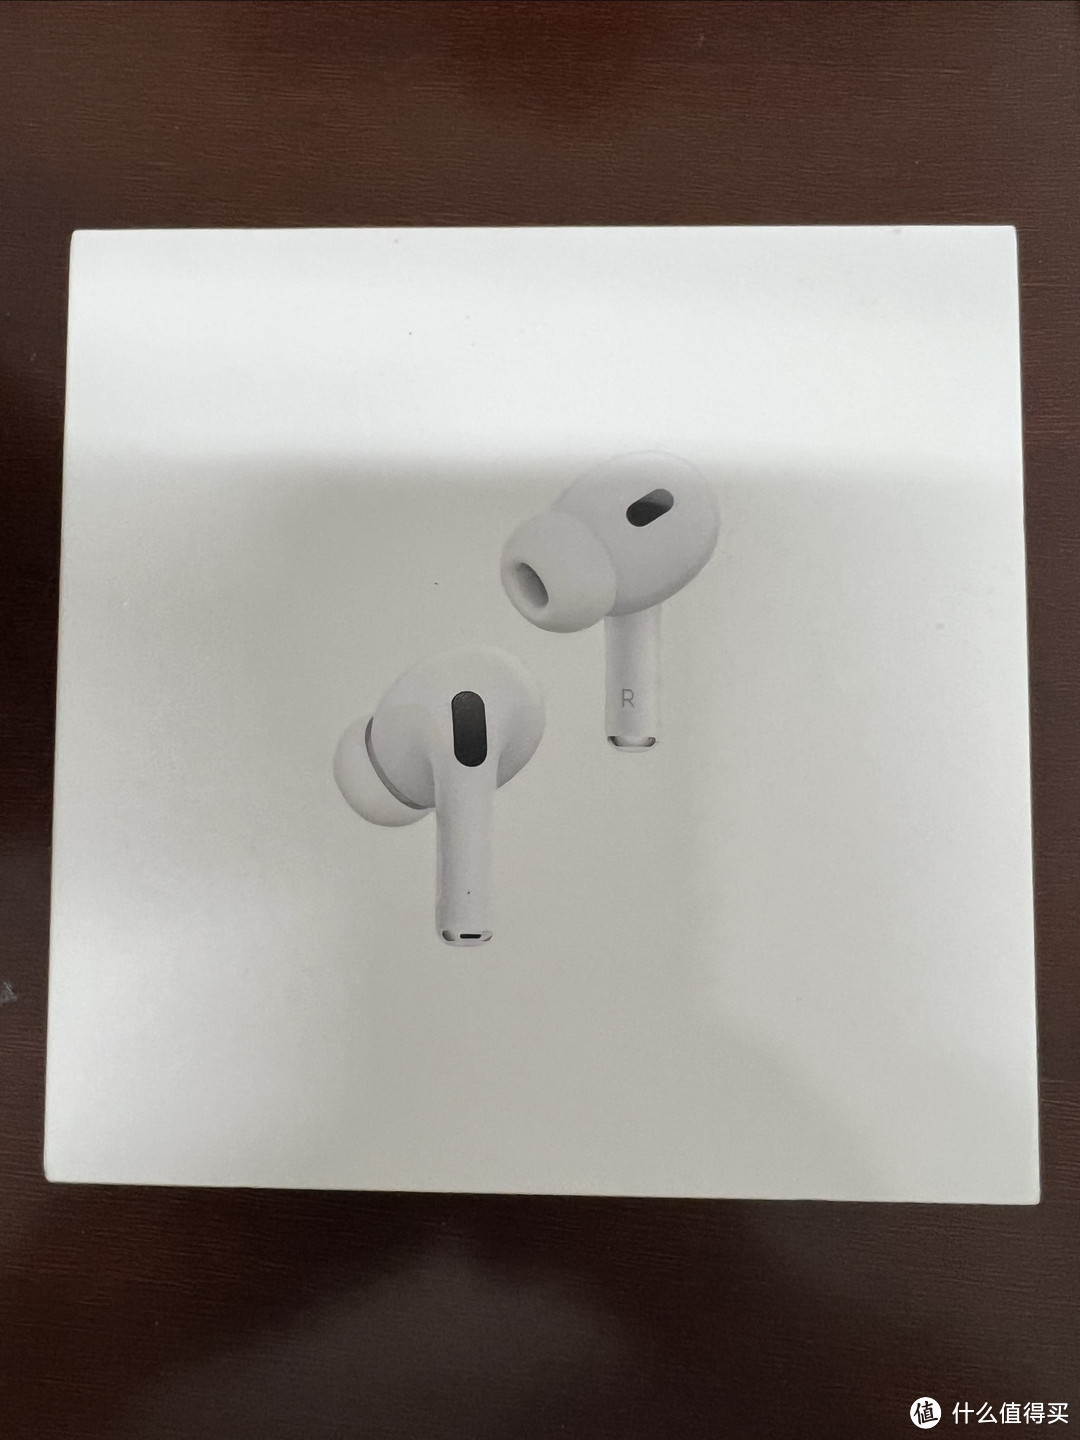 Apple AirPods Pro (第二代) ，一款很好的降噪耳机